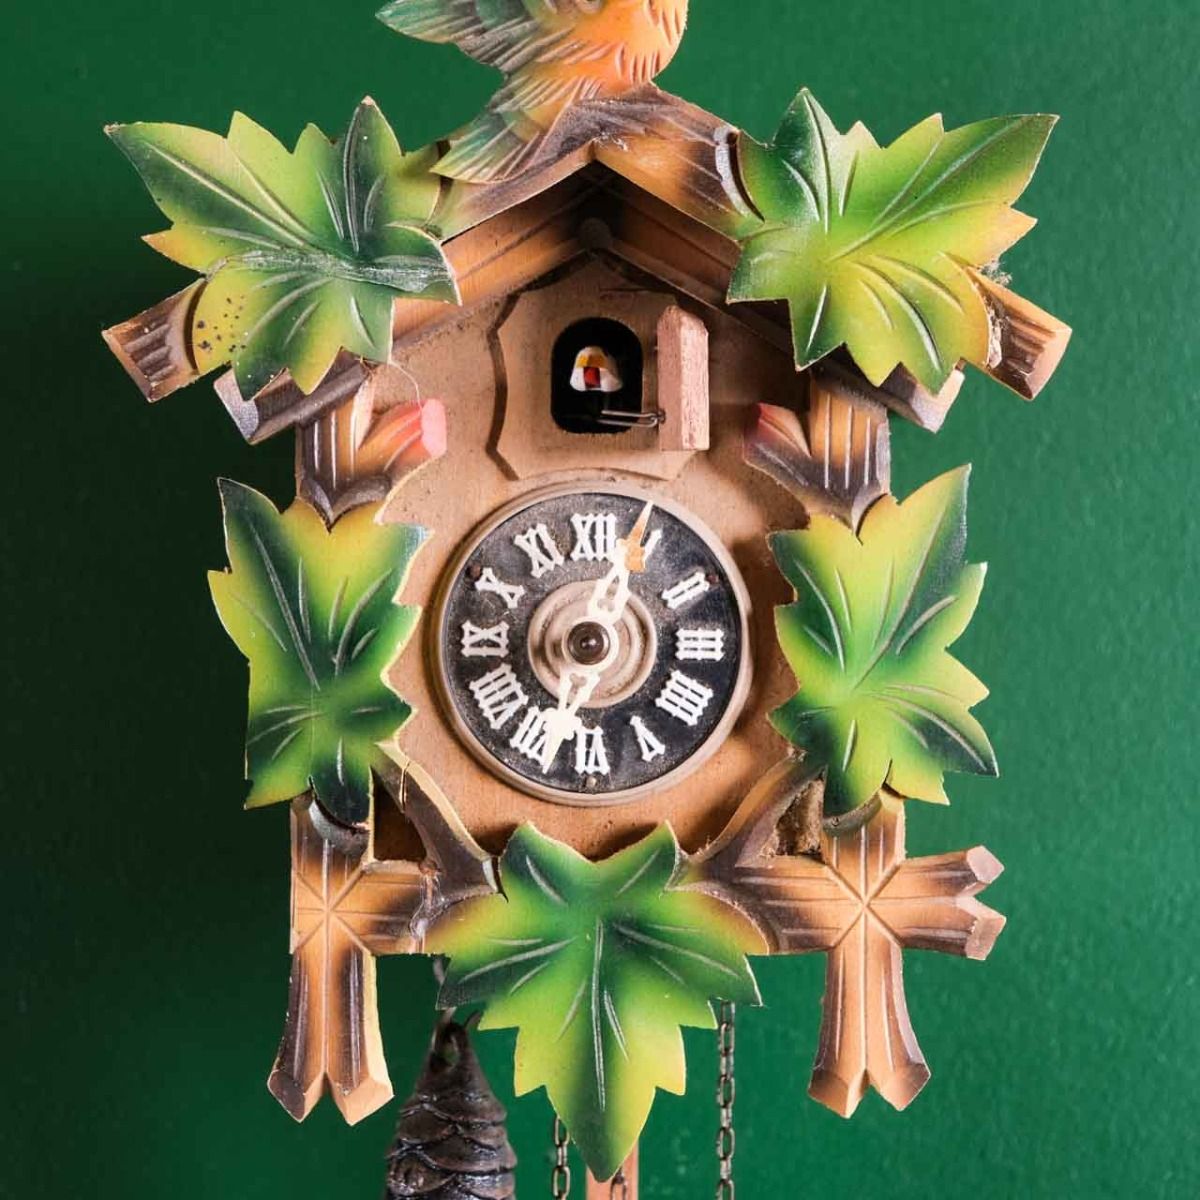 Cuckoo clock,Vintage German wooden cuckoo clock